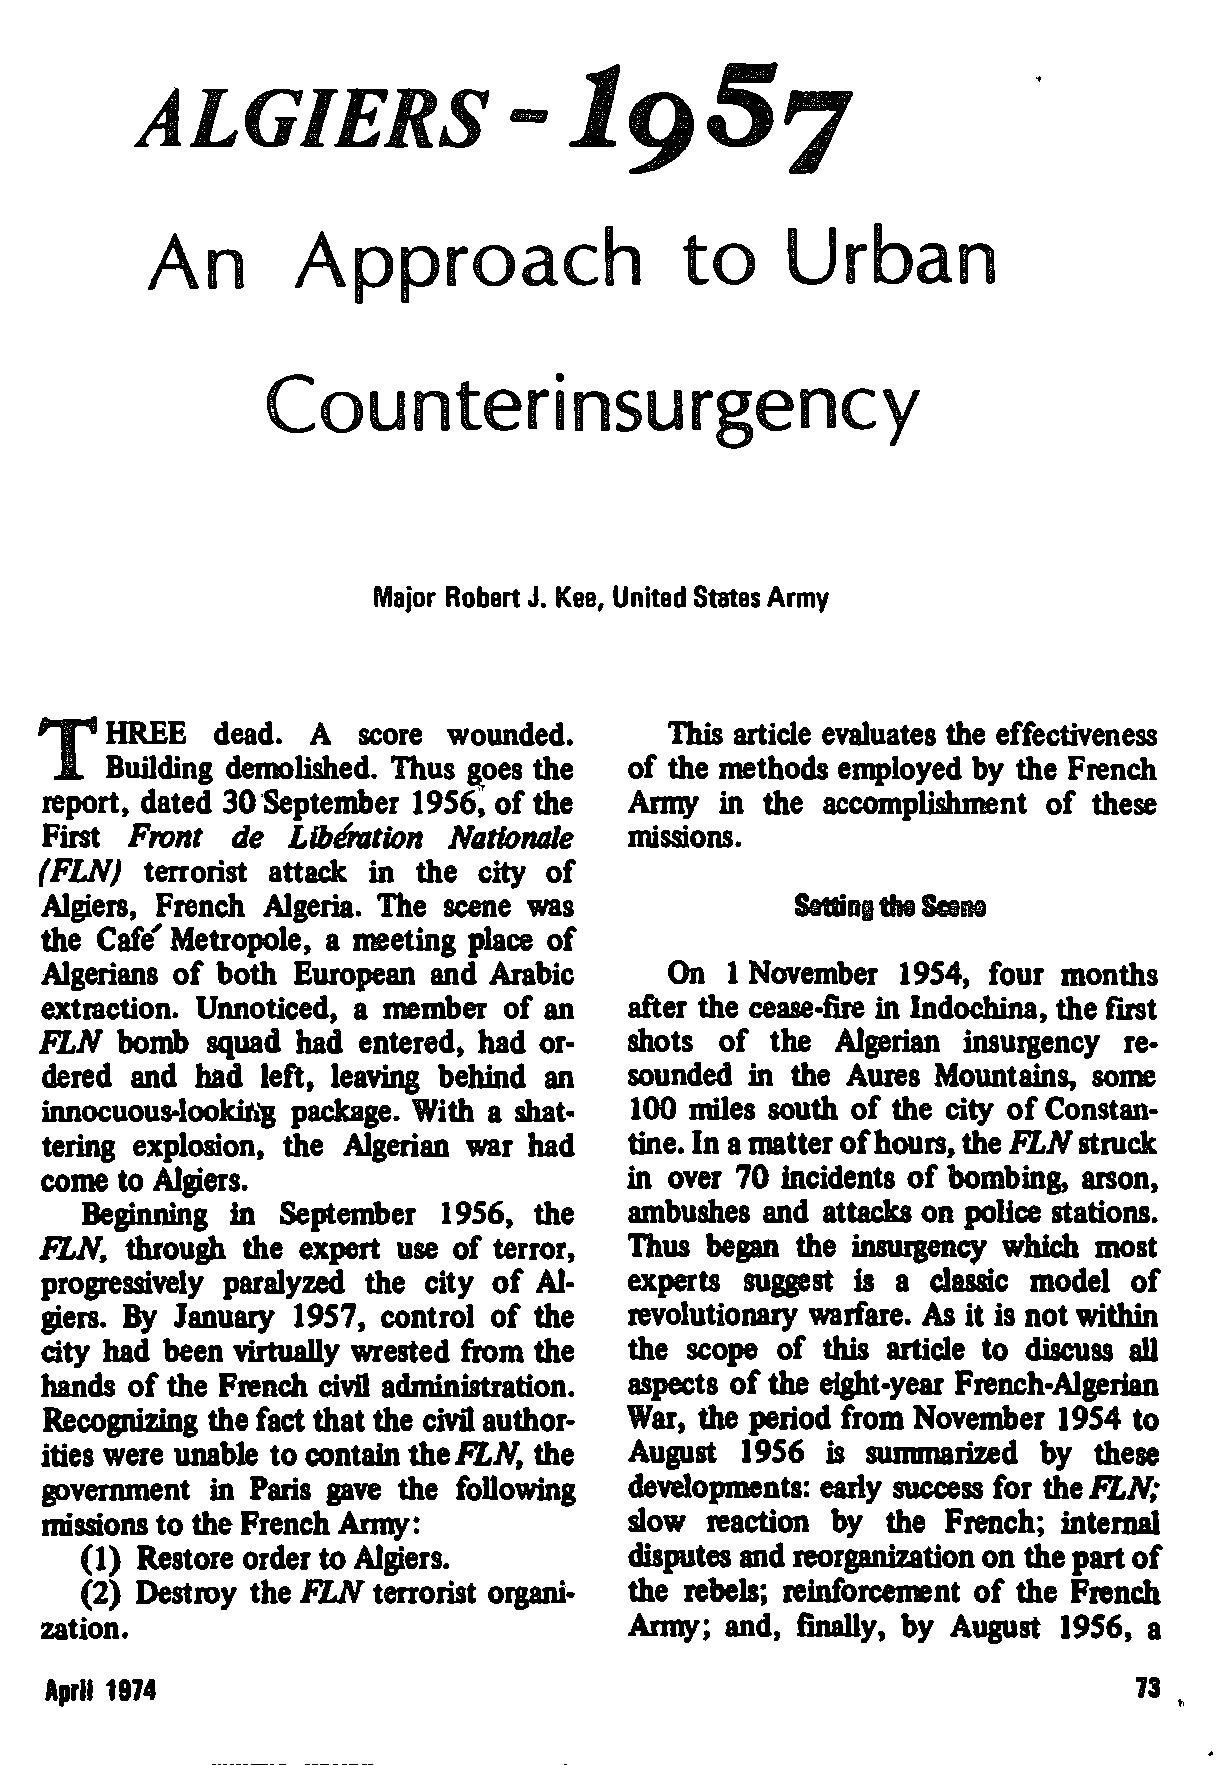 Algiers -1957: An Approach to Urban Counterinsurgency